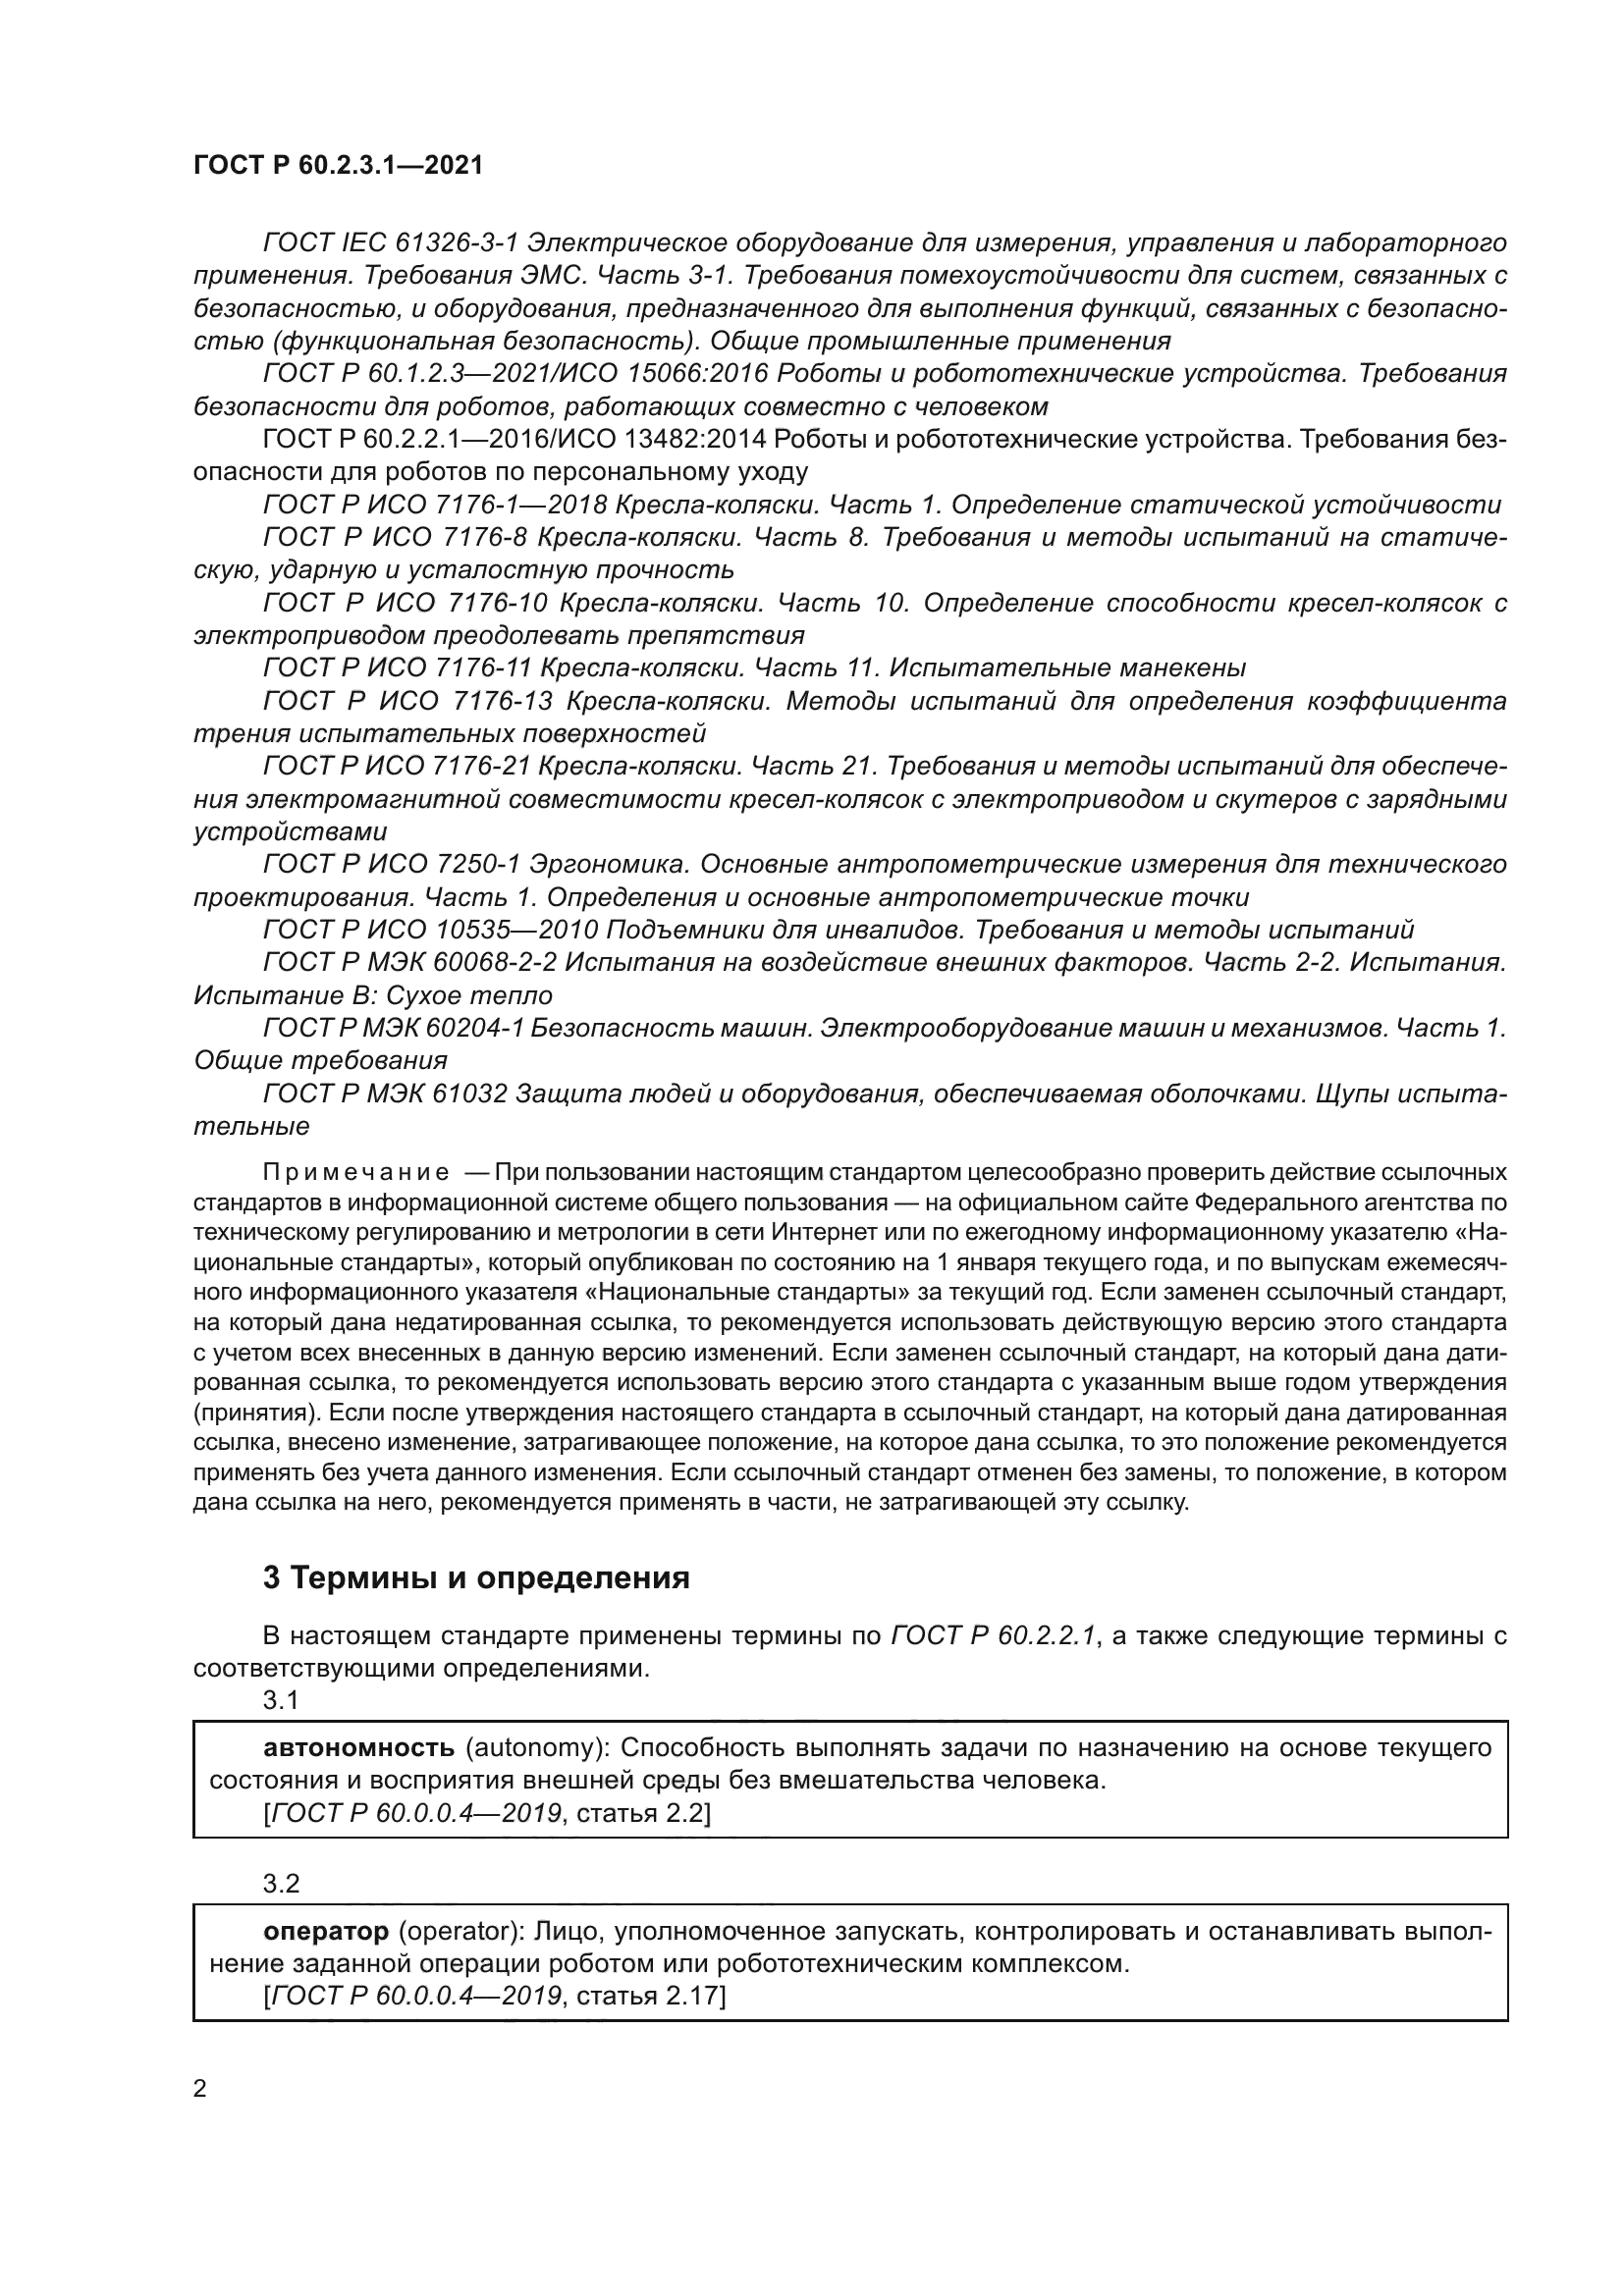 ГОСТ Р 60.2.3.1-2021